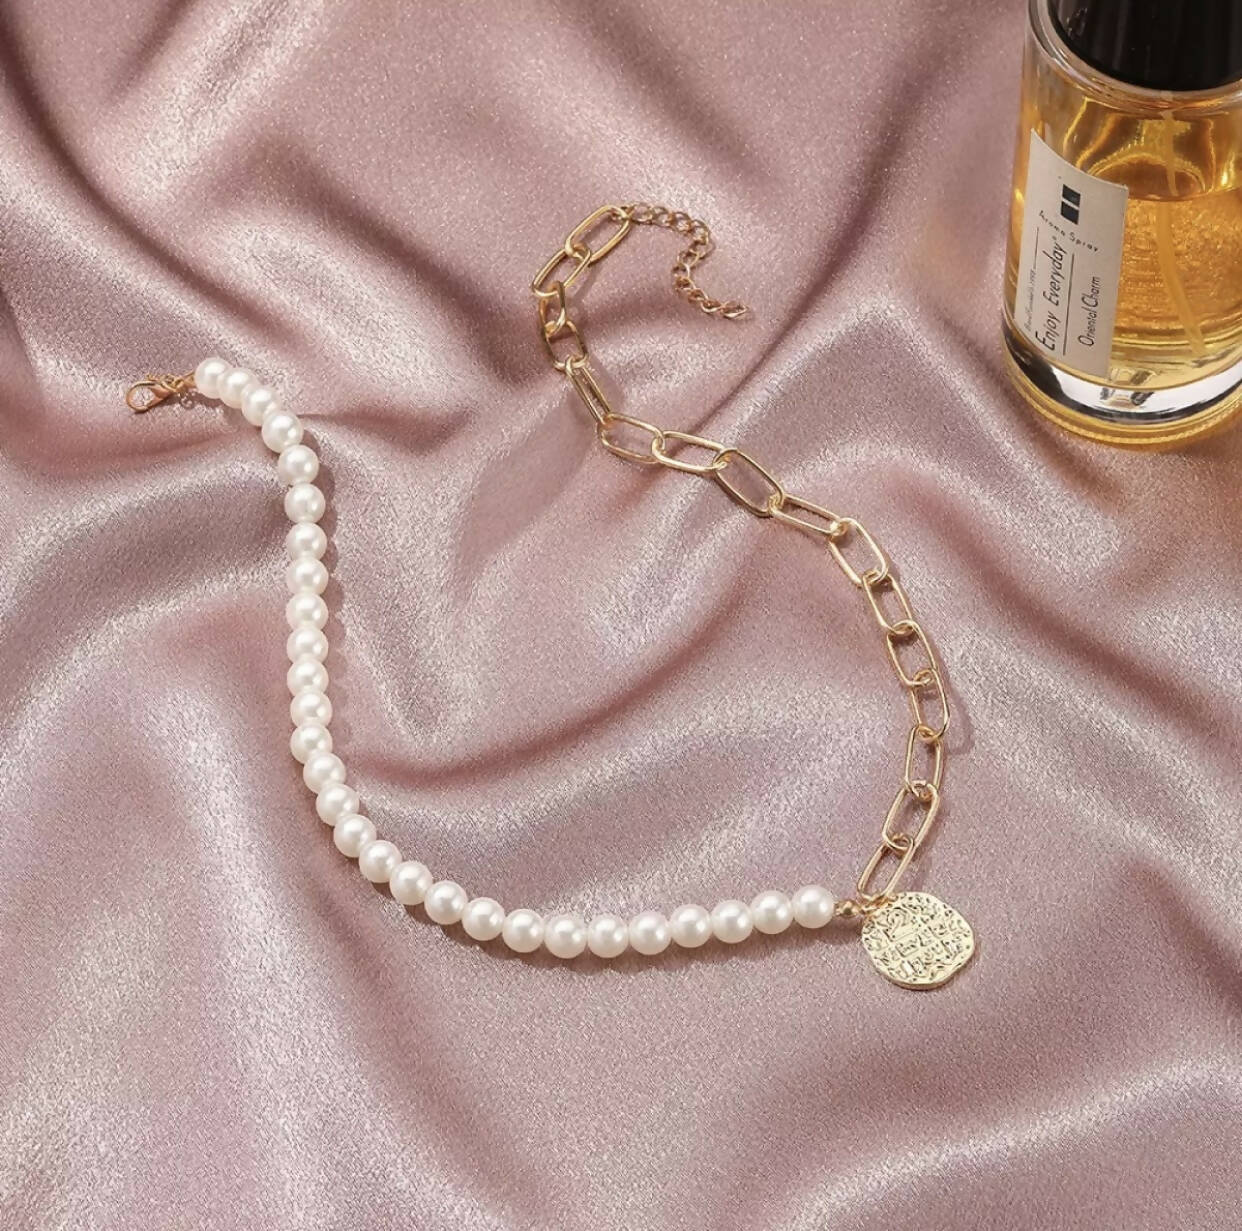 Pearl necklace | Women Jewelry | Brand New